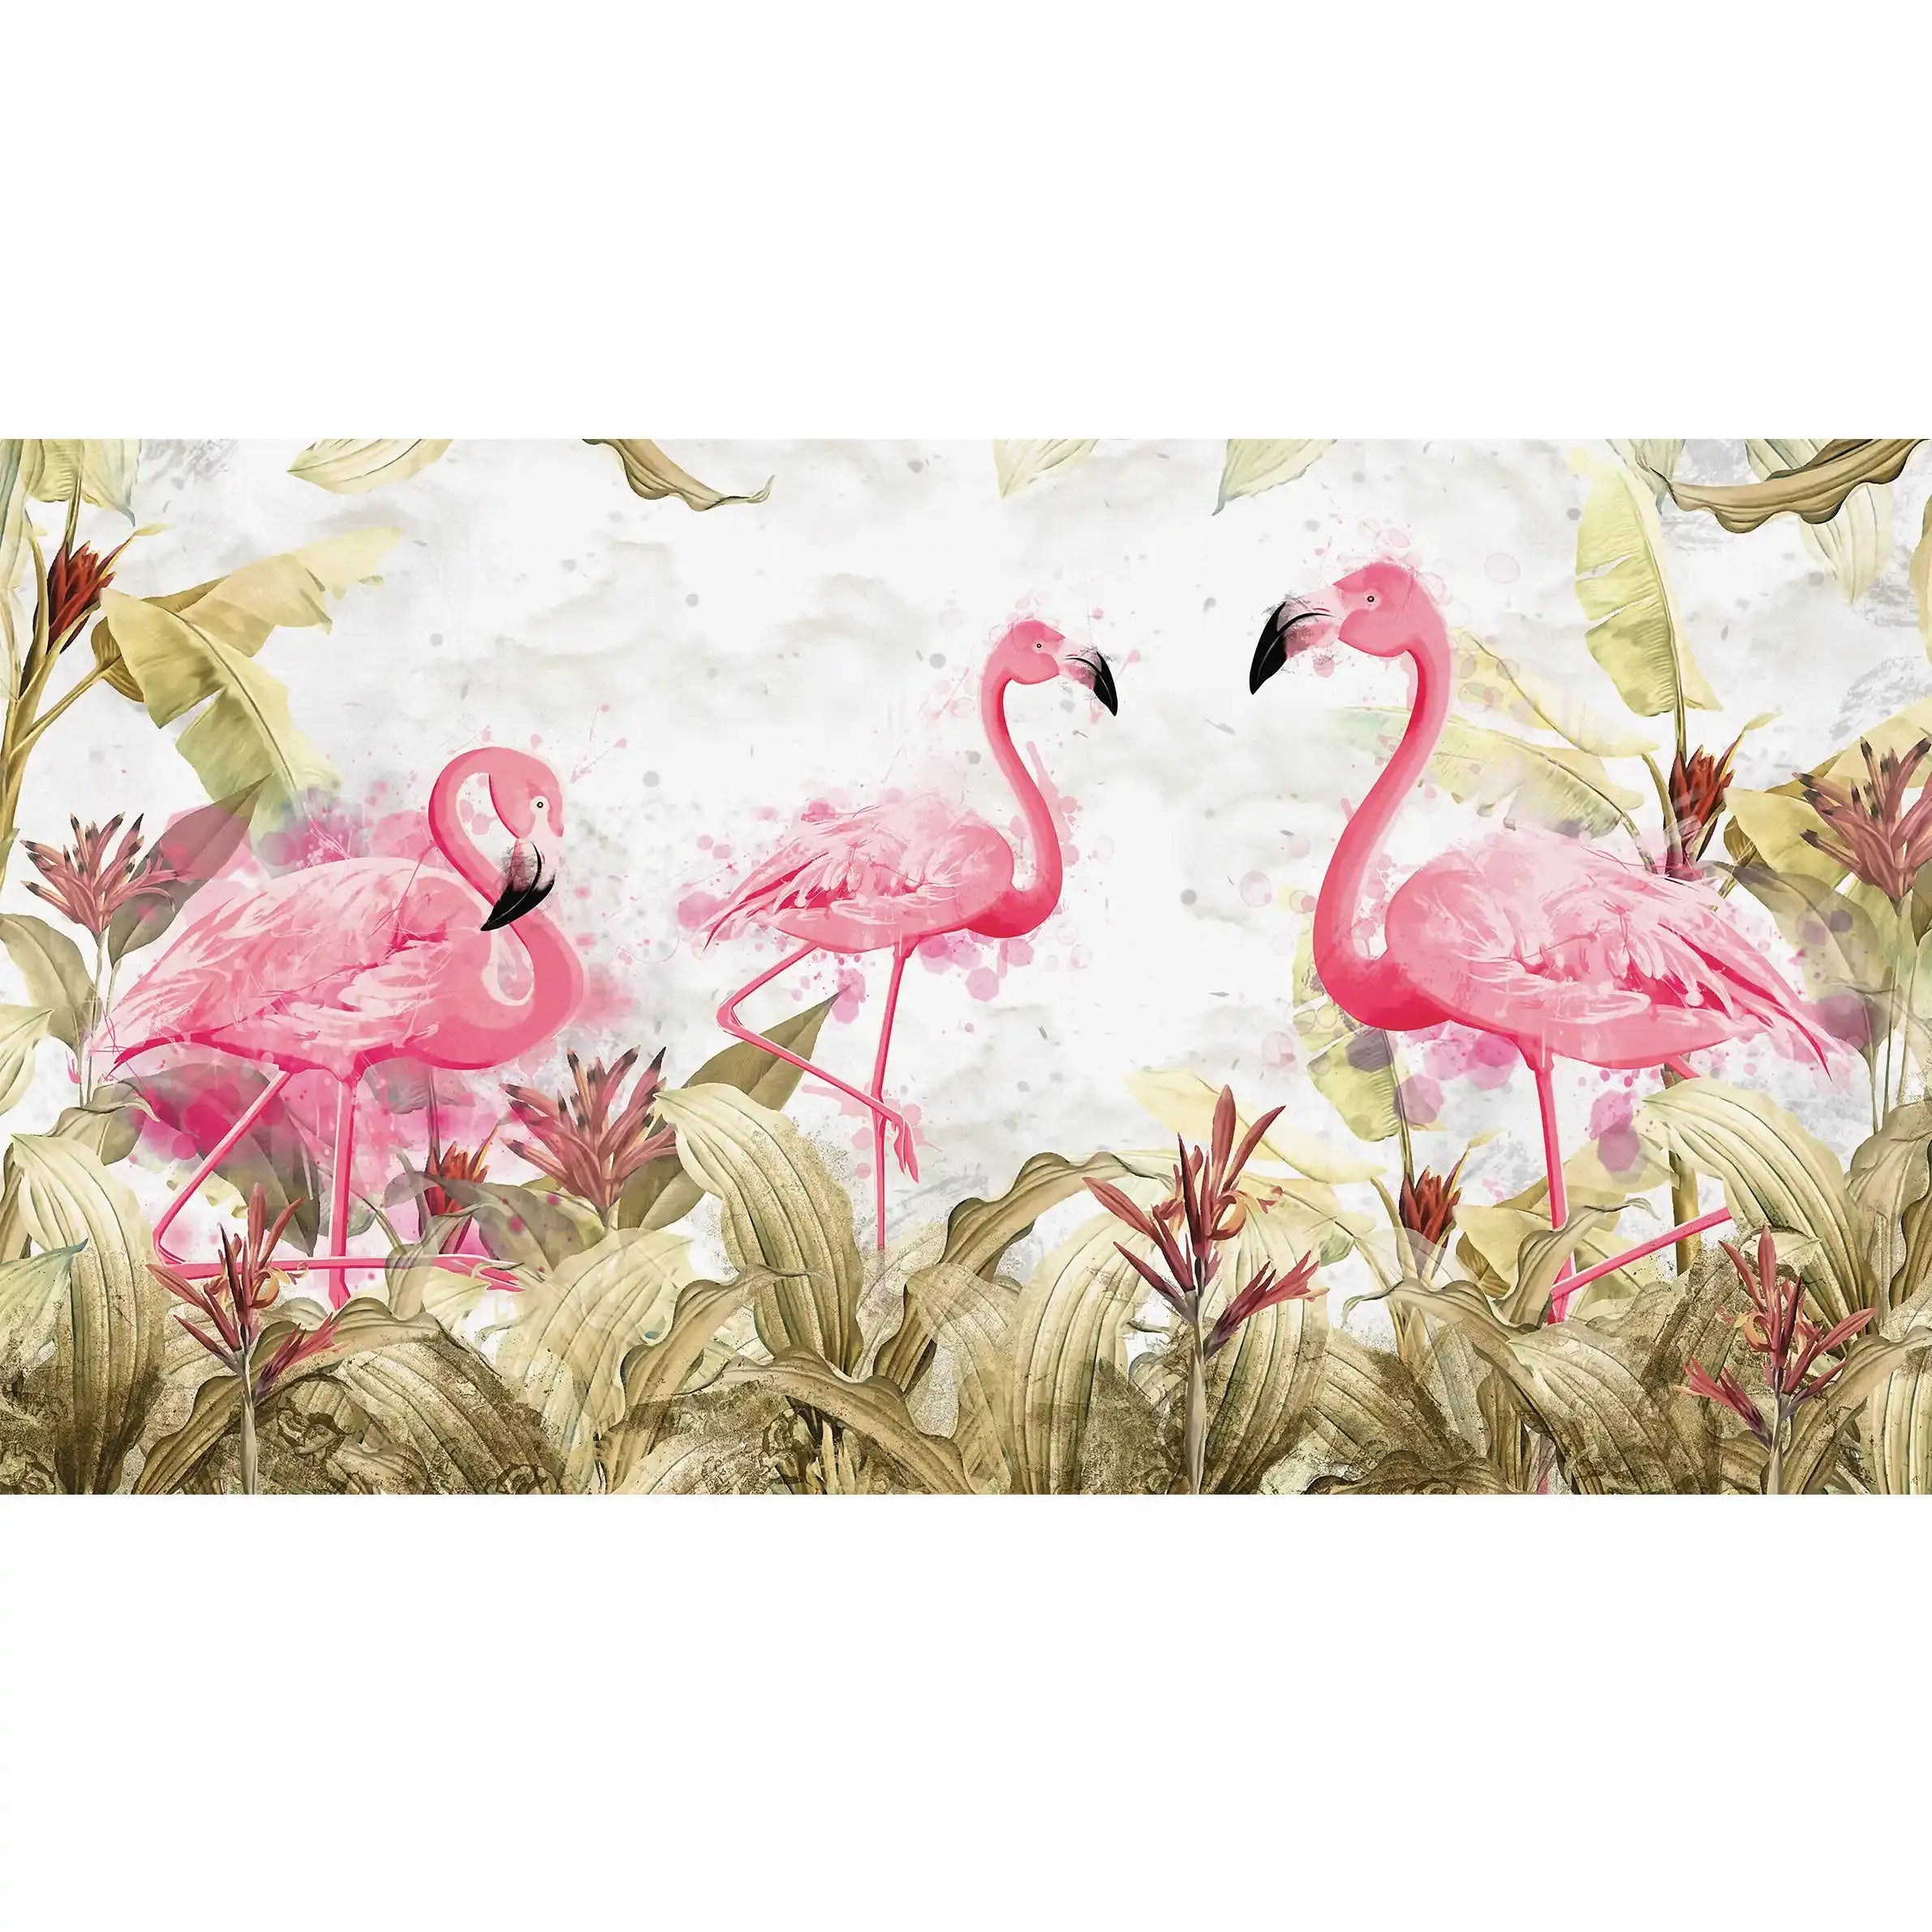 3069-C / Tropical Peel & Stick Wallpaper – Vibrant Pink Flamingo and Leaf Design for DIY Home Decor - Artevella